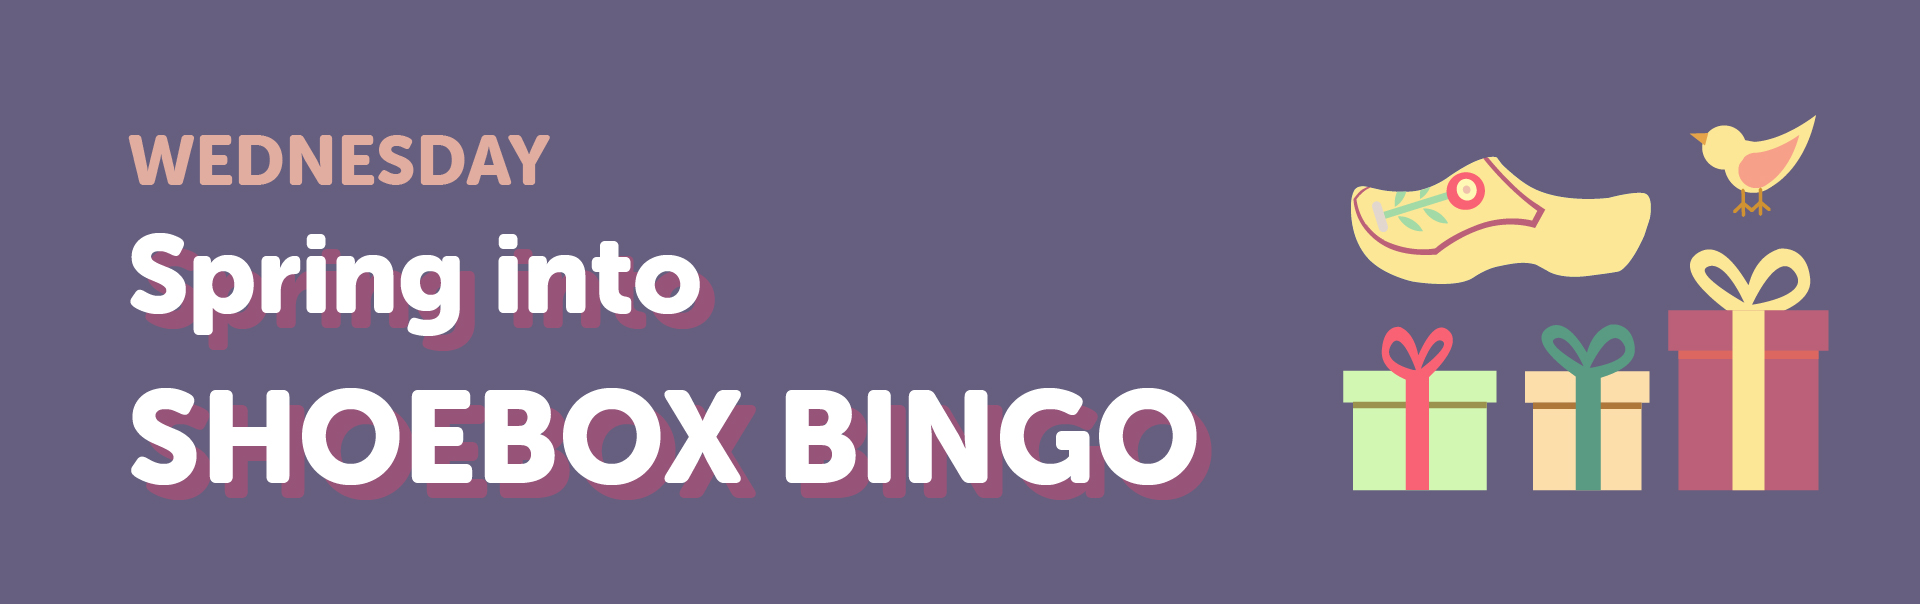 Wednesday: Spring into Shoebox bingo